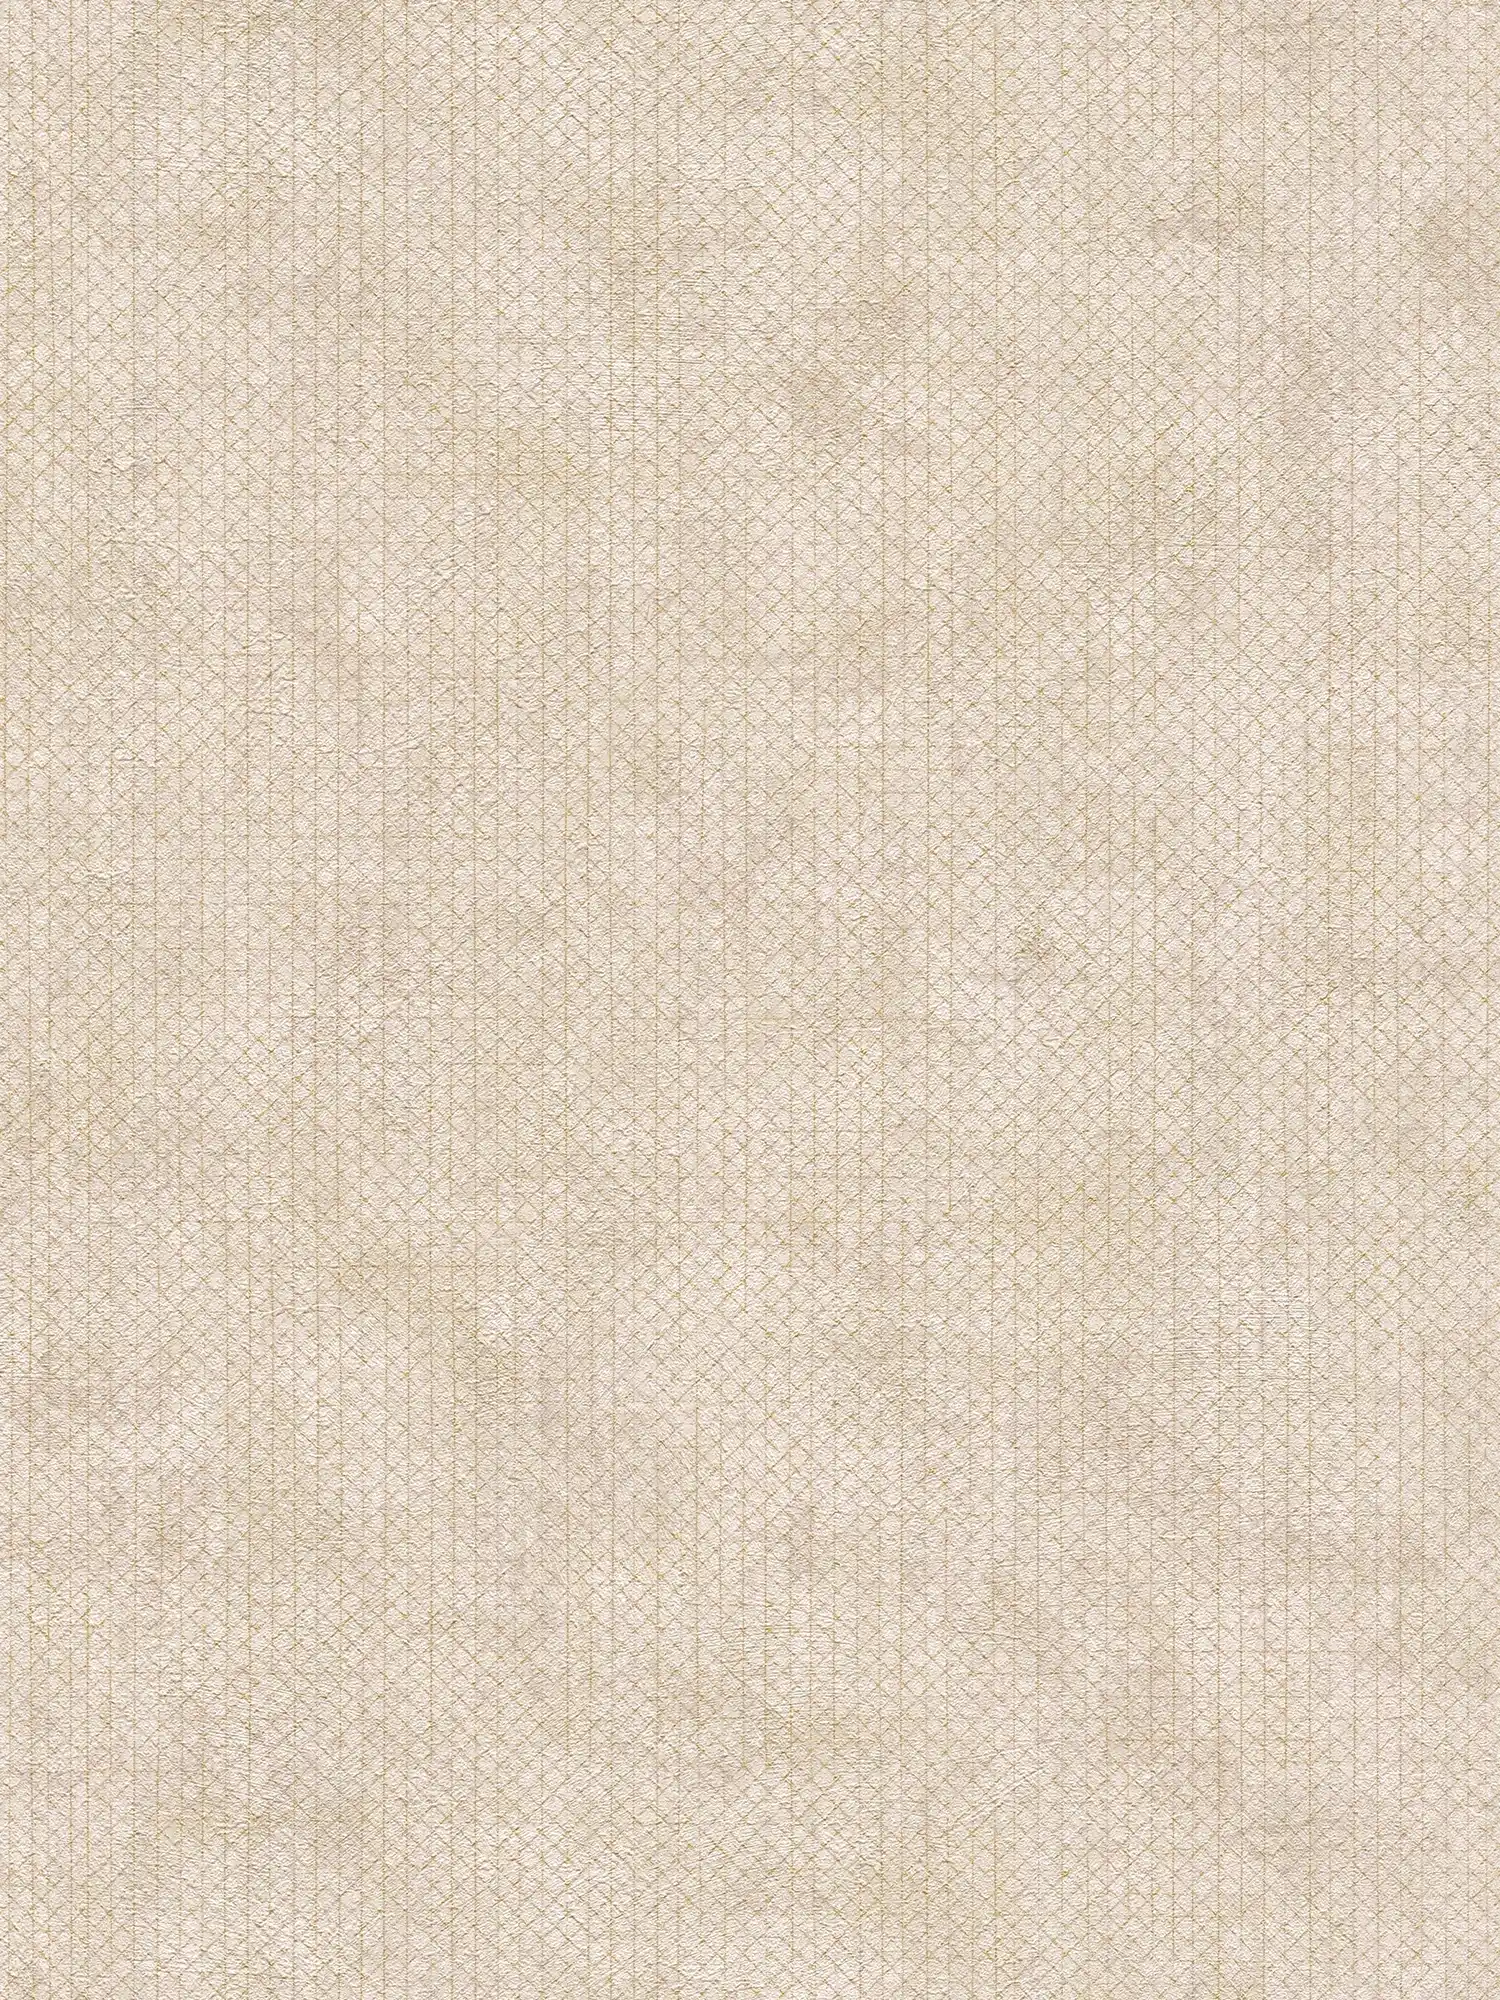 Wallpaper cream-beige with metallic texture pattern
